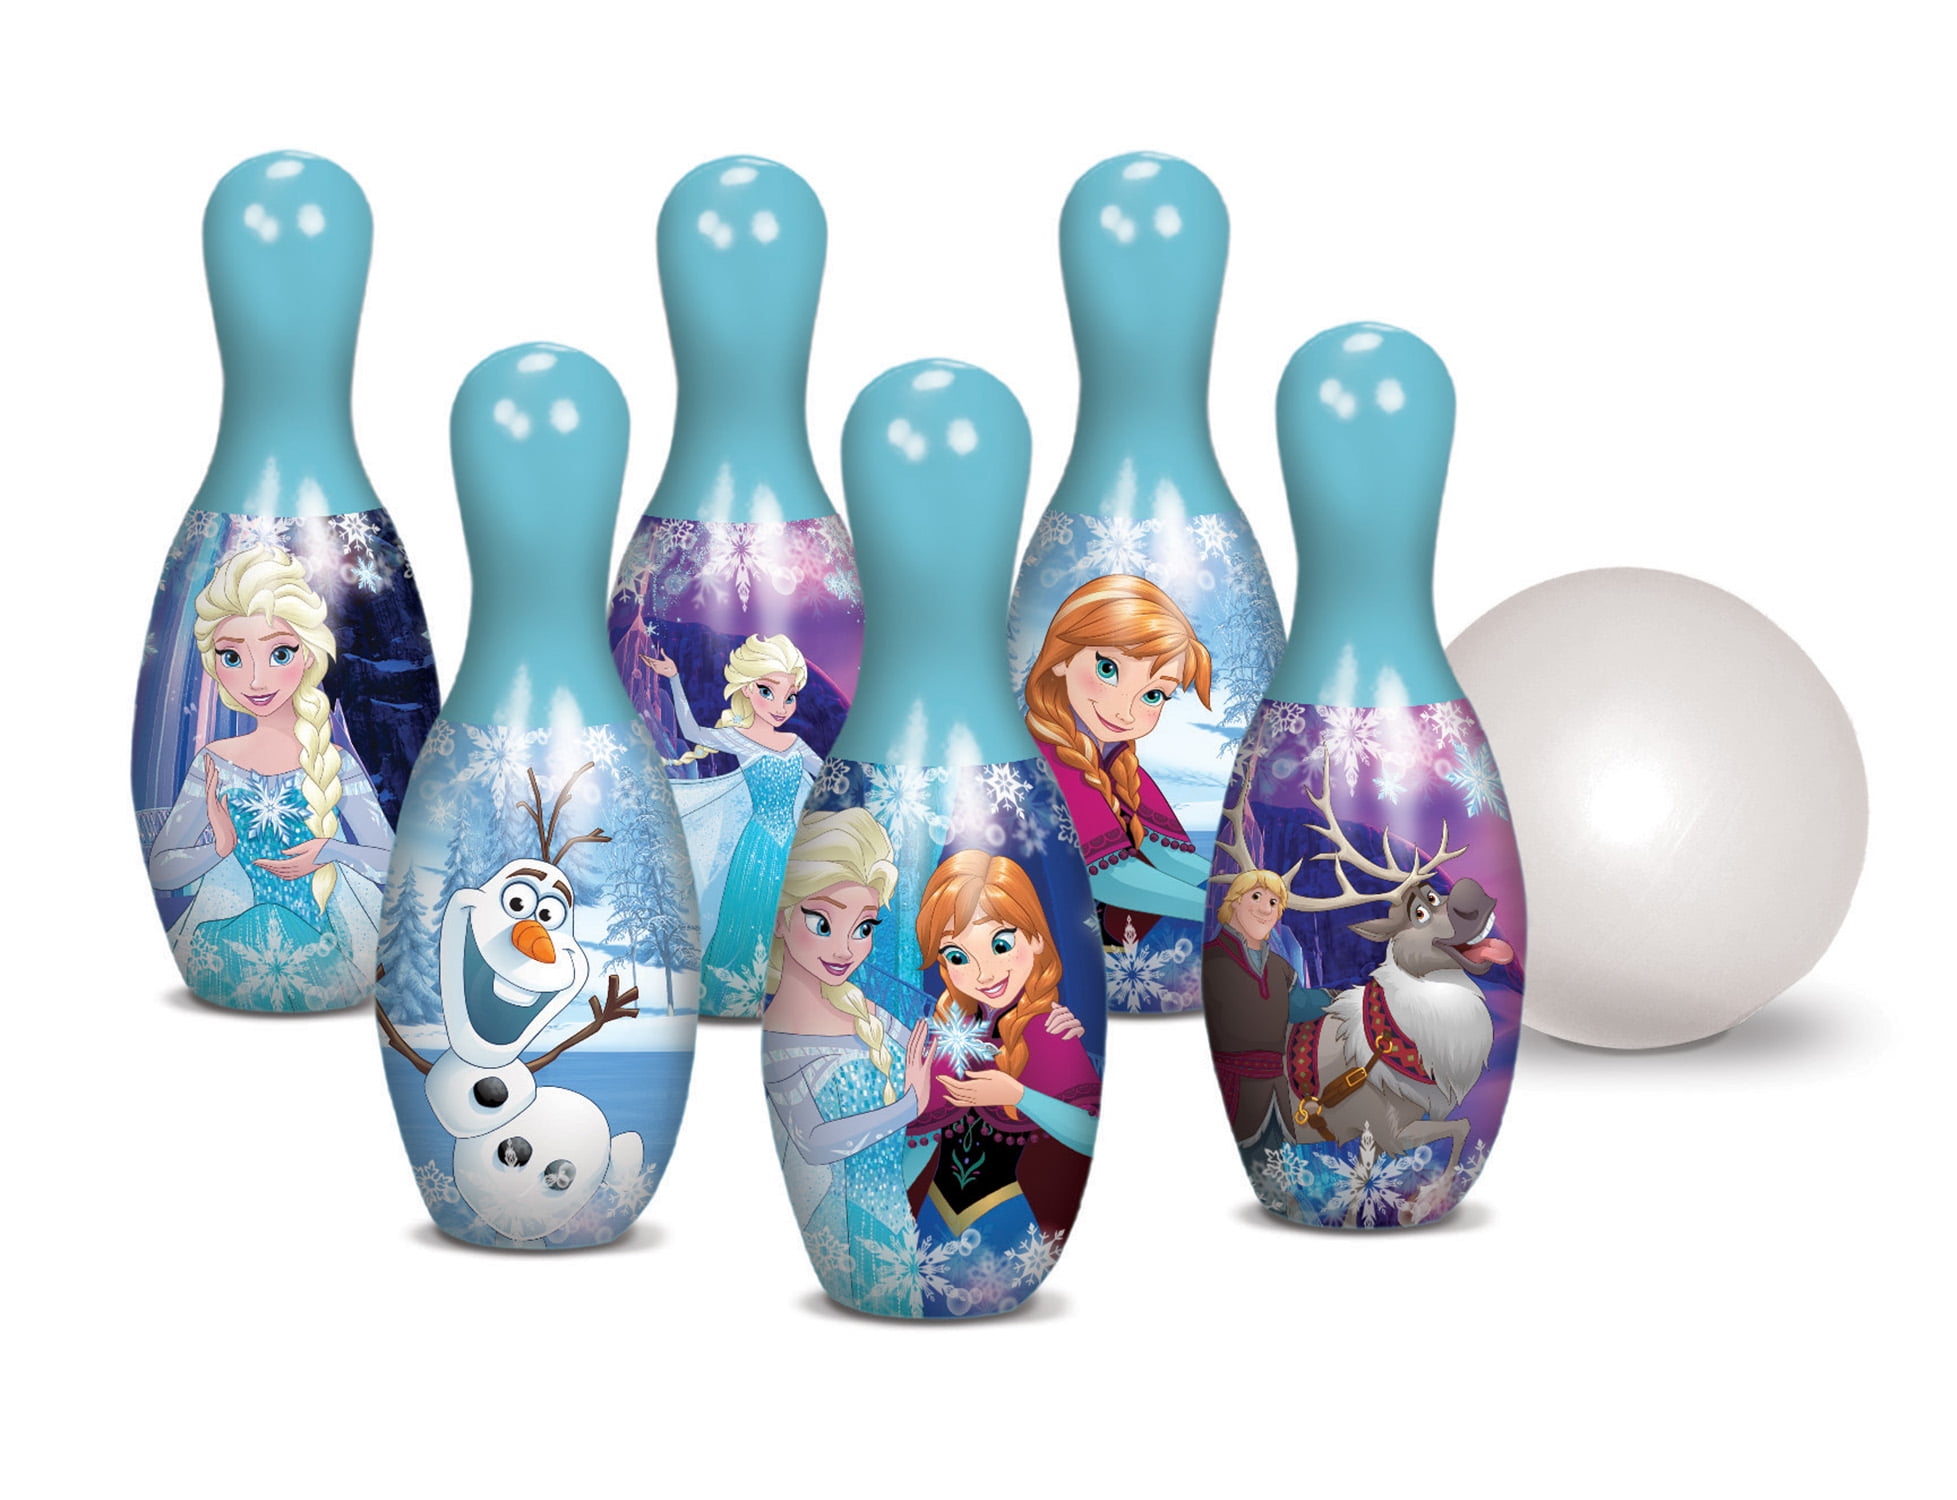 John 41131 Bowling Game Anna Elsa Bowling Set Skittles Game Frozen 2 Disney Frozen FSC Wood Multi-Coloured